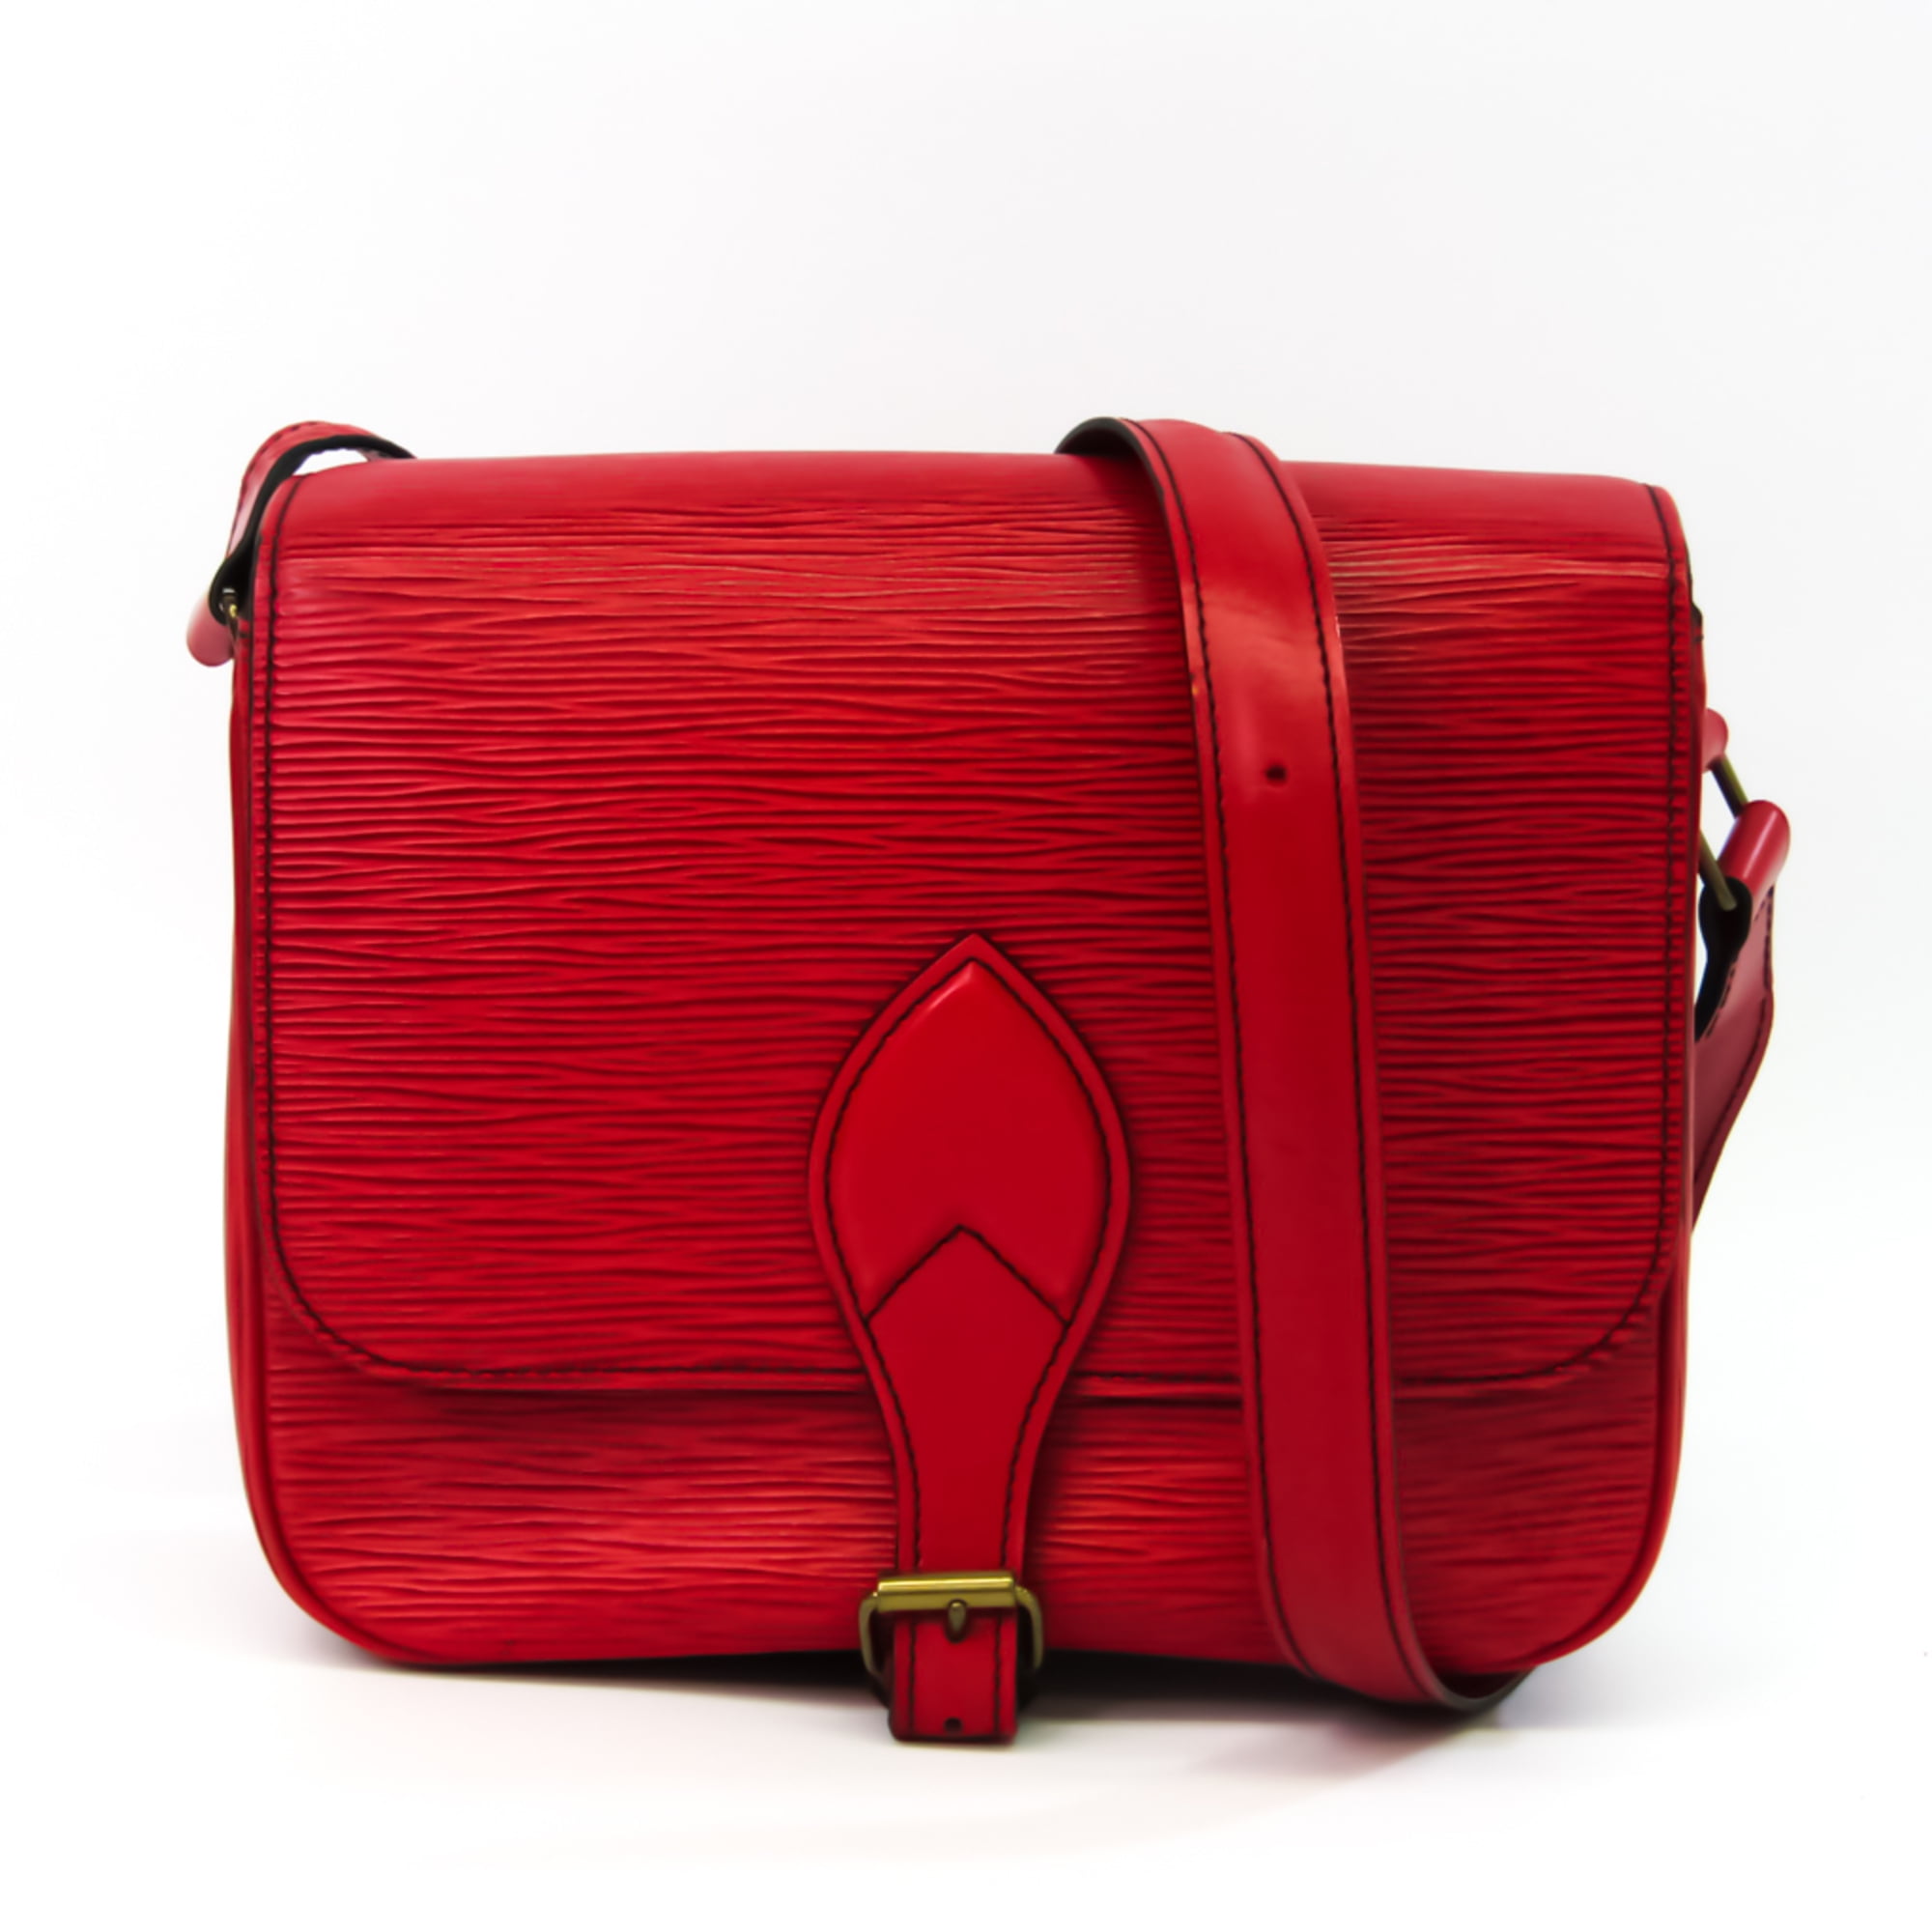 Authentic LOUIS VUITTON Handbag Cartouchiere Crossbody Bag 